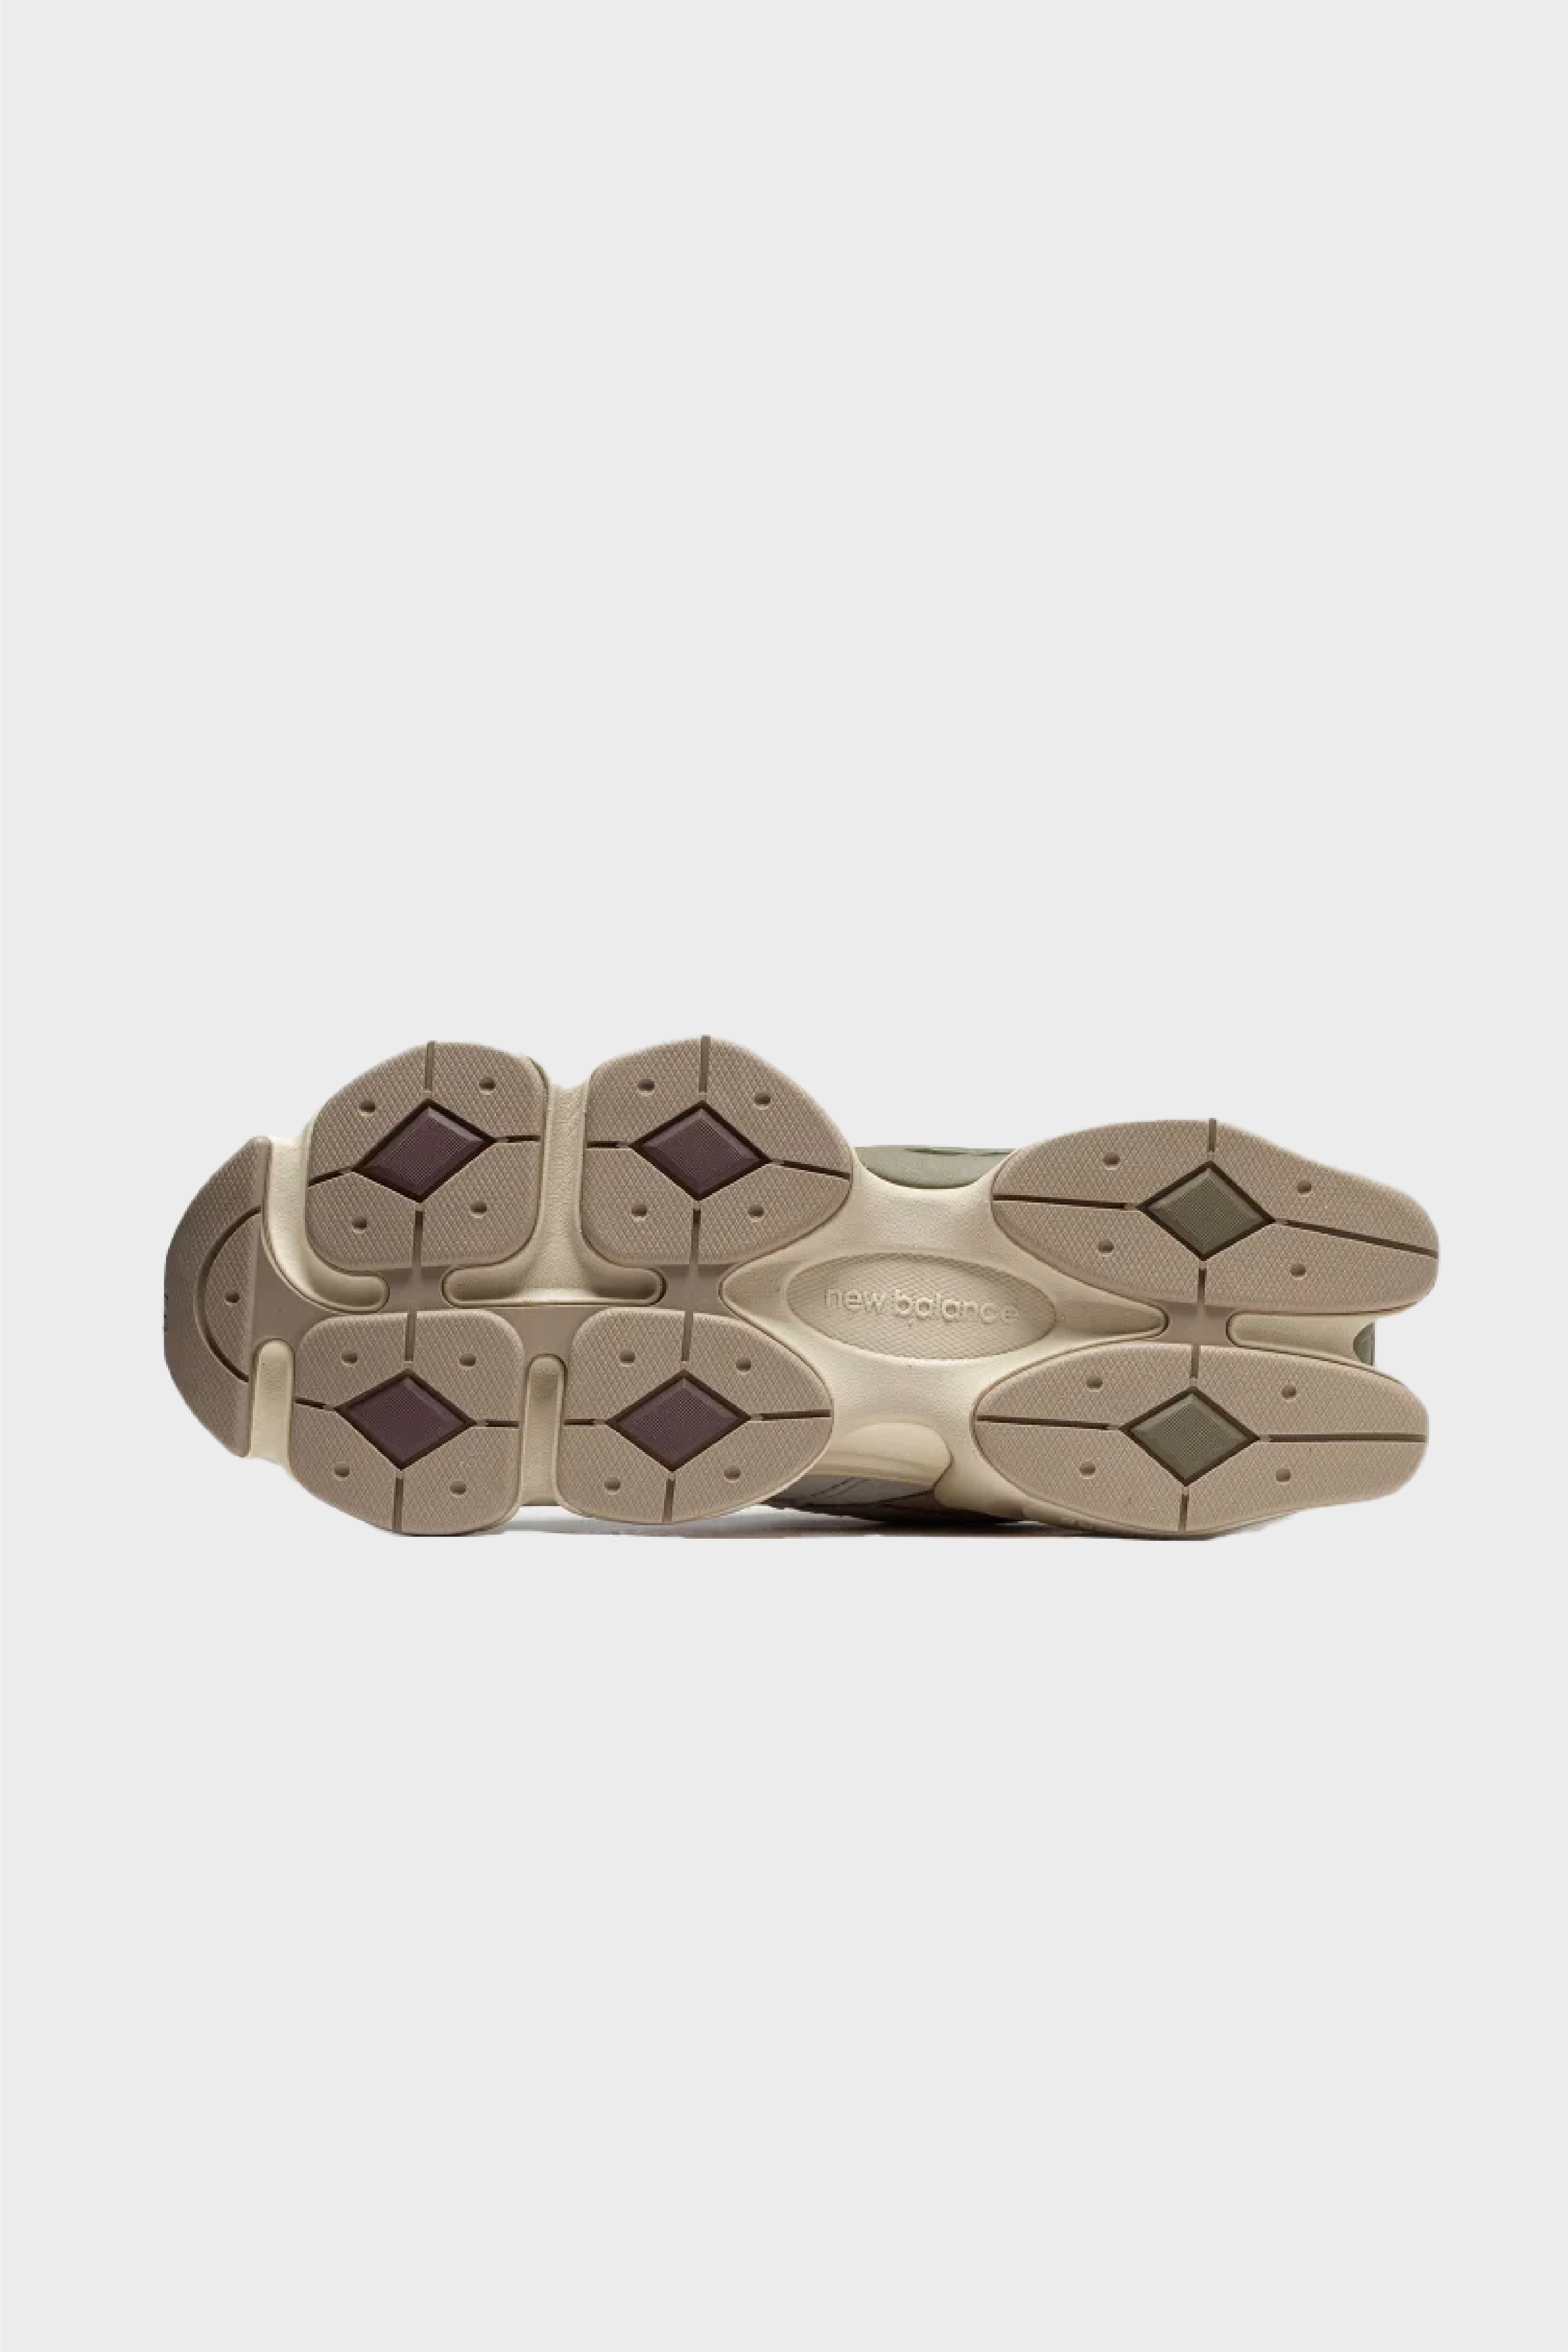 Selectshop FRAME - NEW BALANCE 9060 "Grey Matter Timberwolf" Footwear Concept Store Dubai